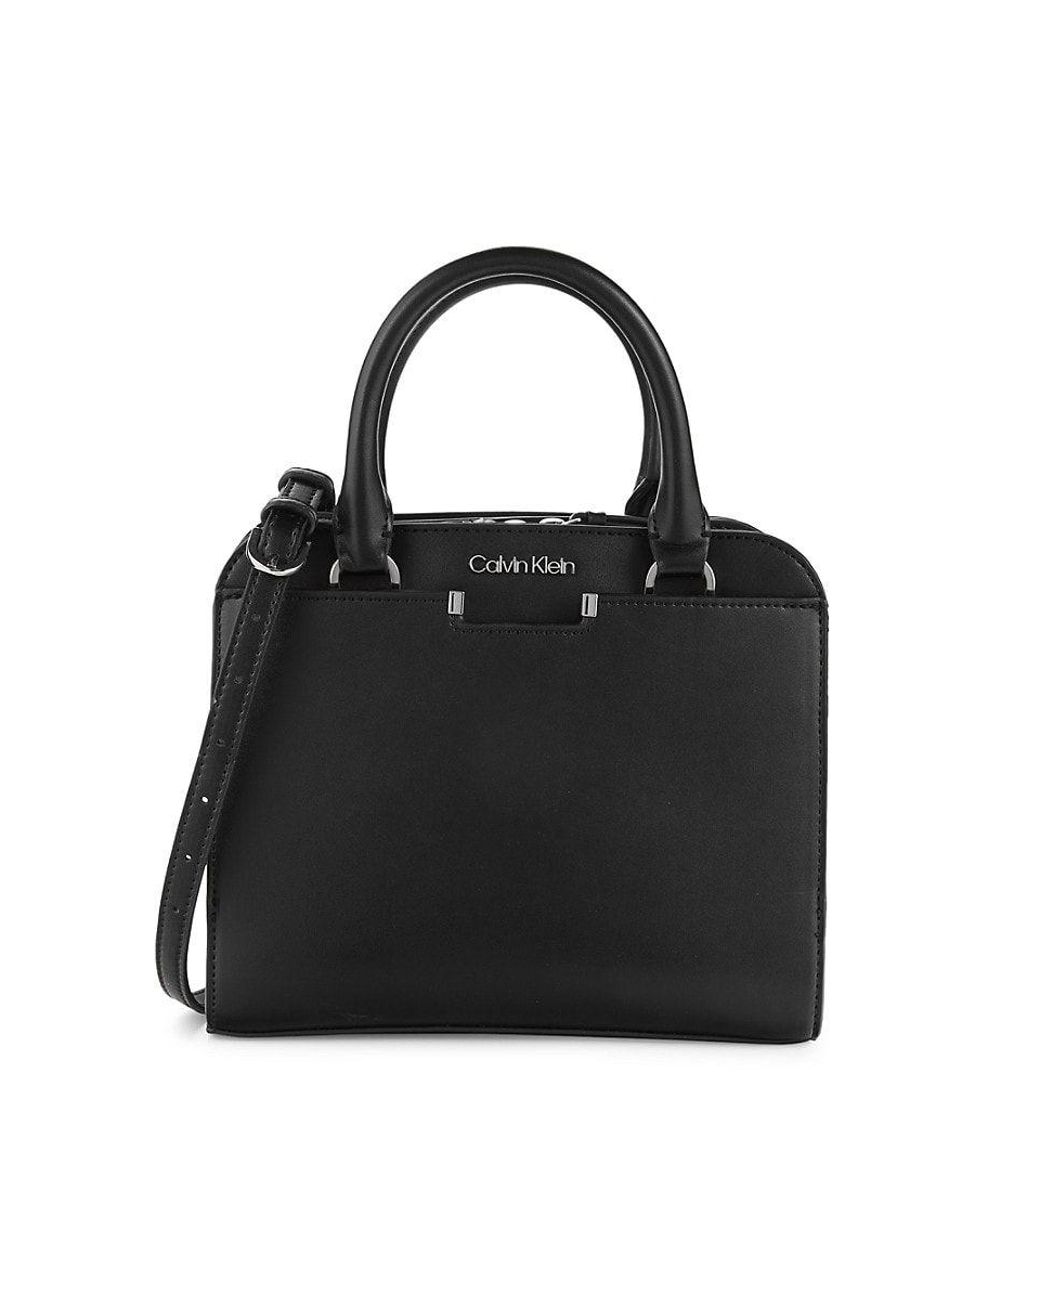 Calvin Klein Danica Logo Top Handle Bag in Black | Lyst